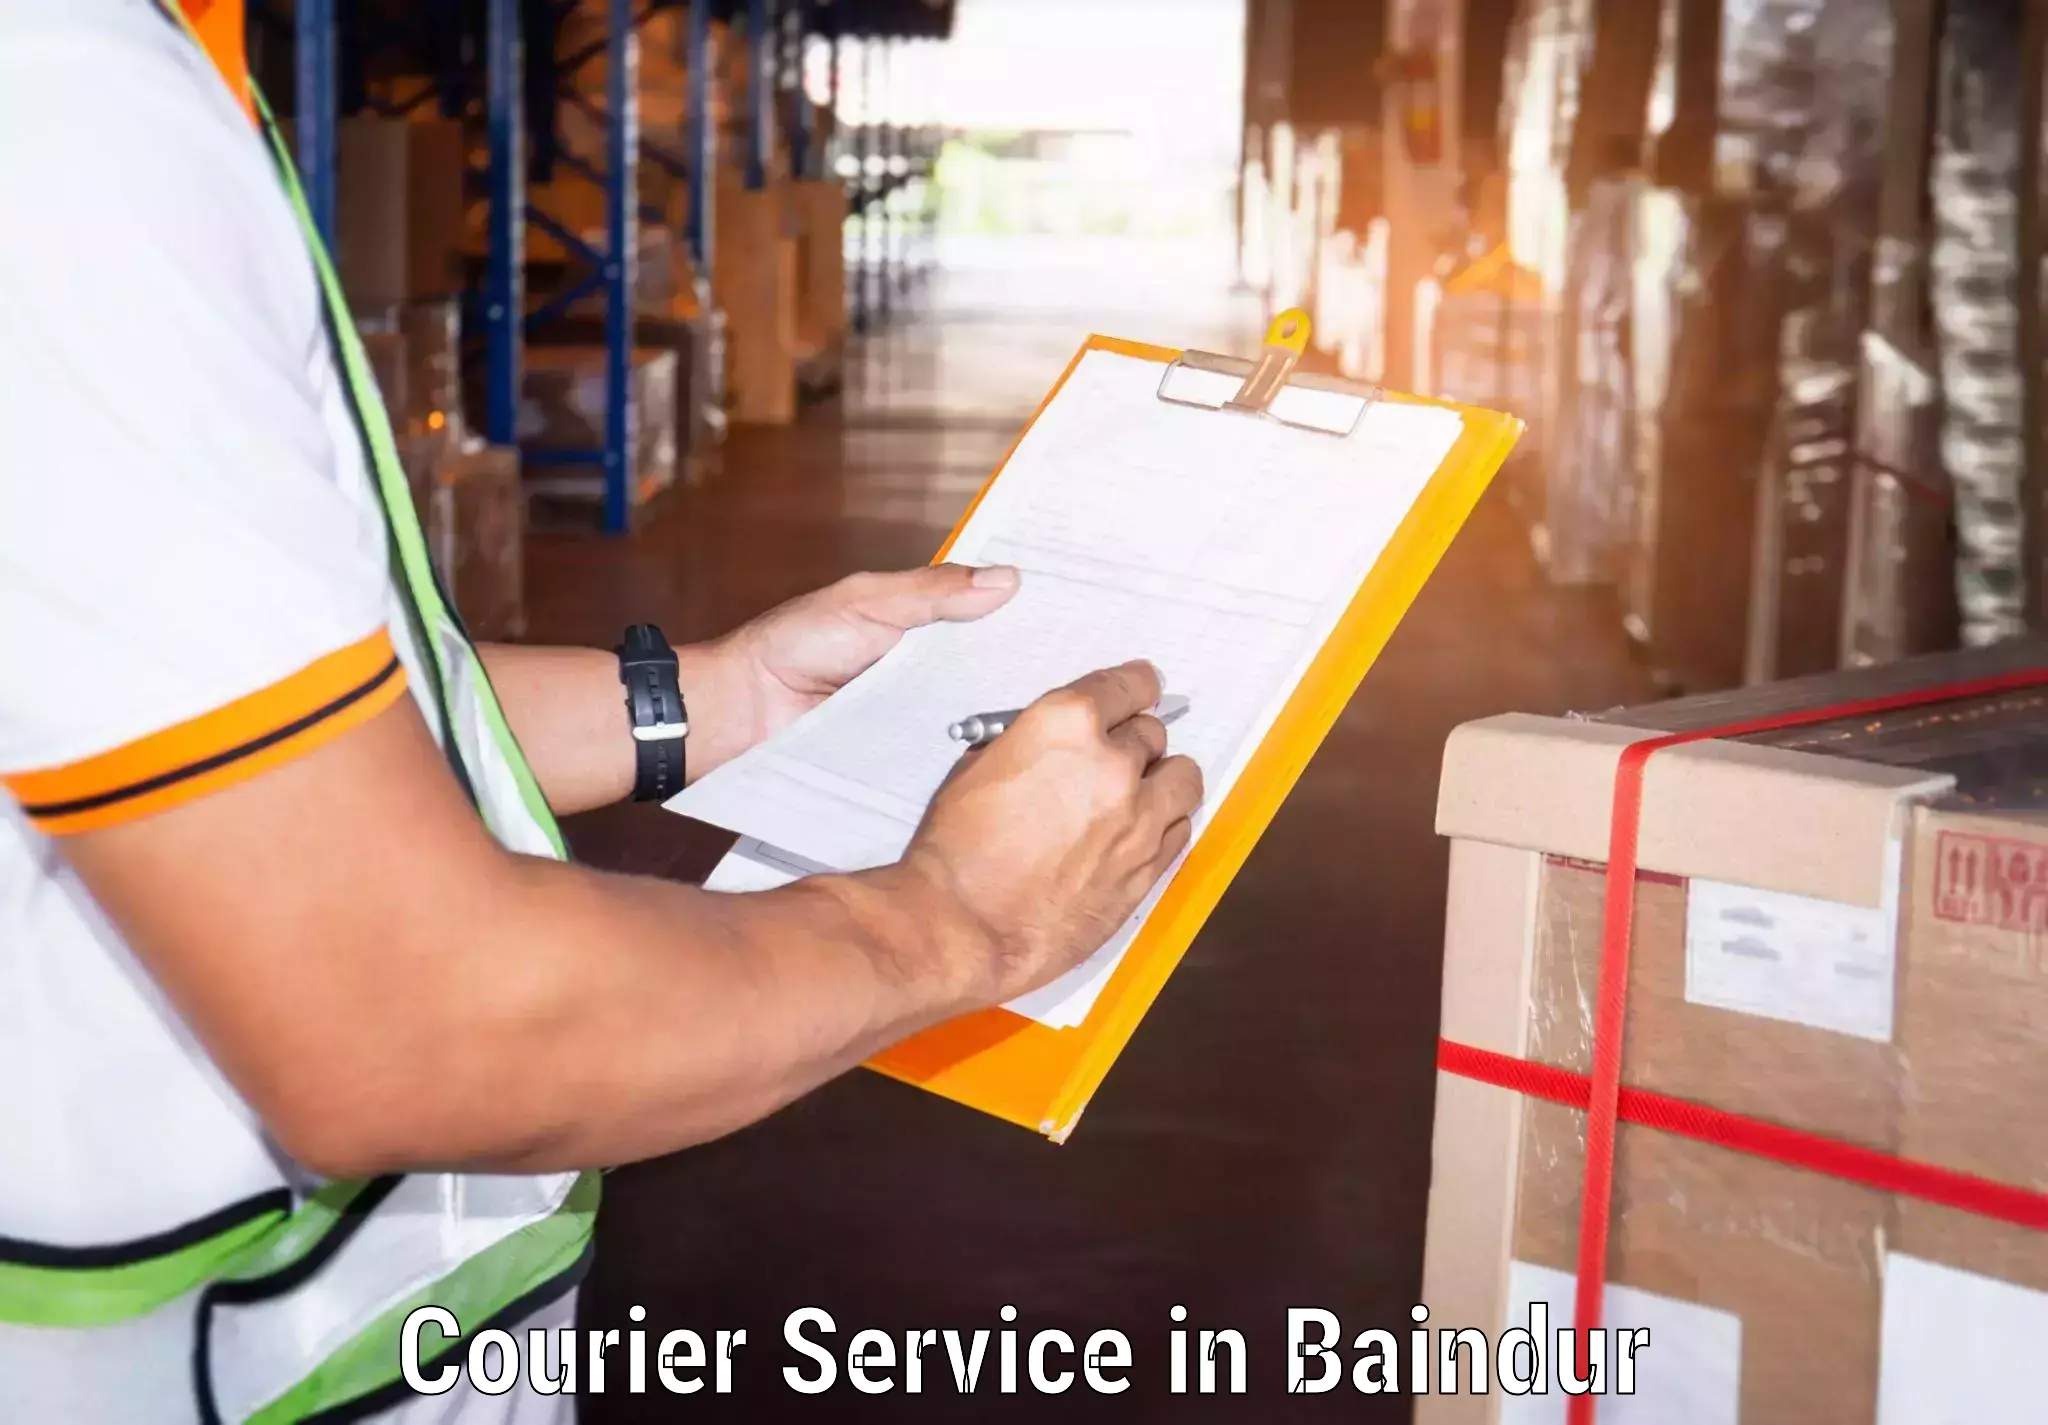 Shipping and handling in Baindur